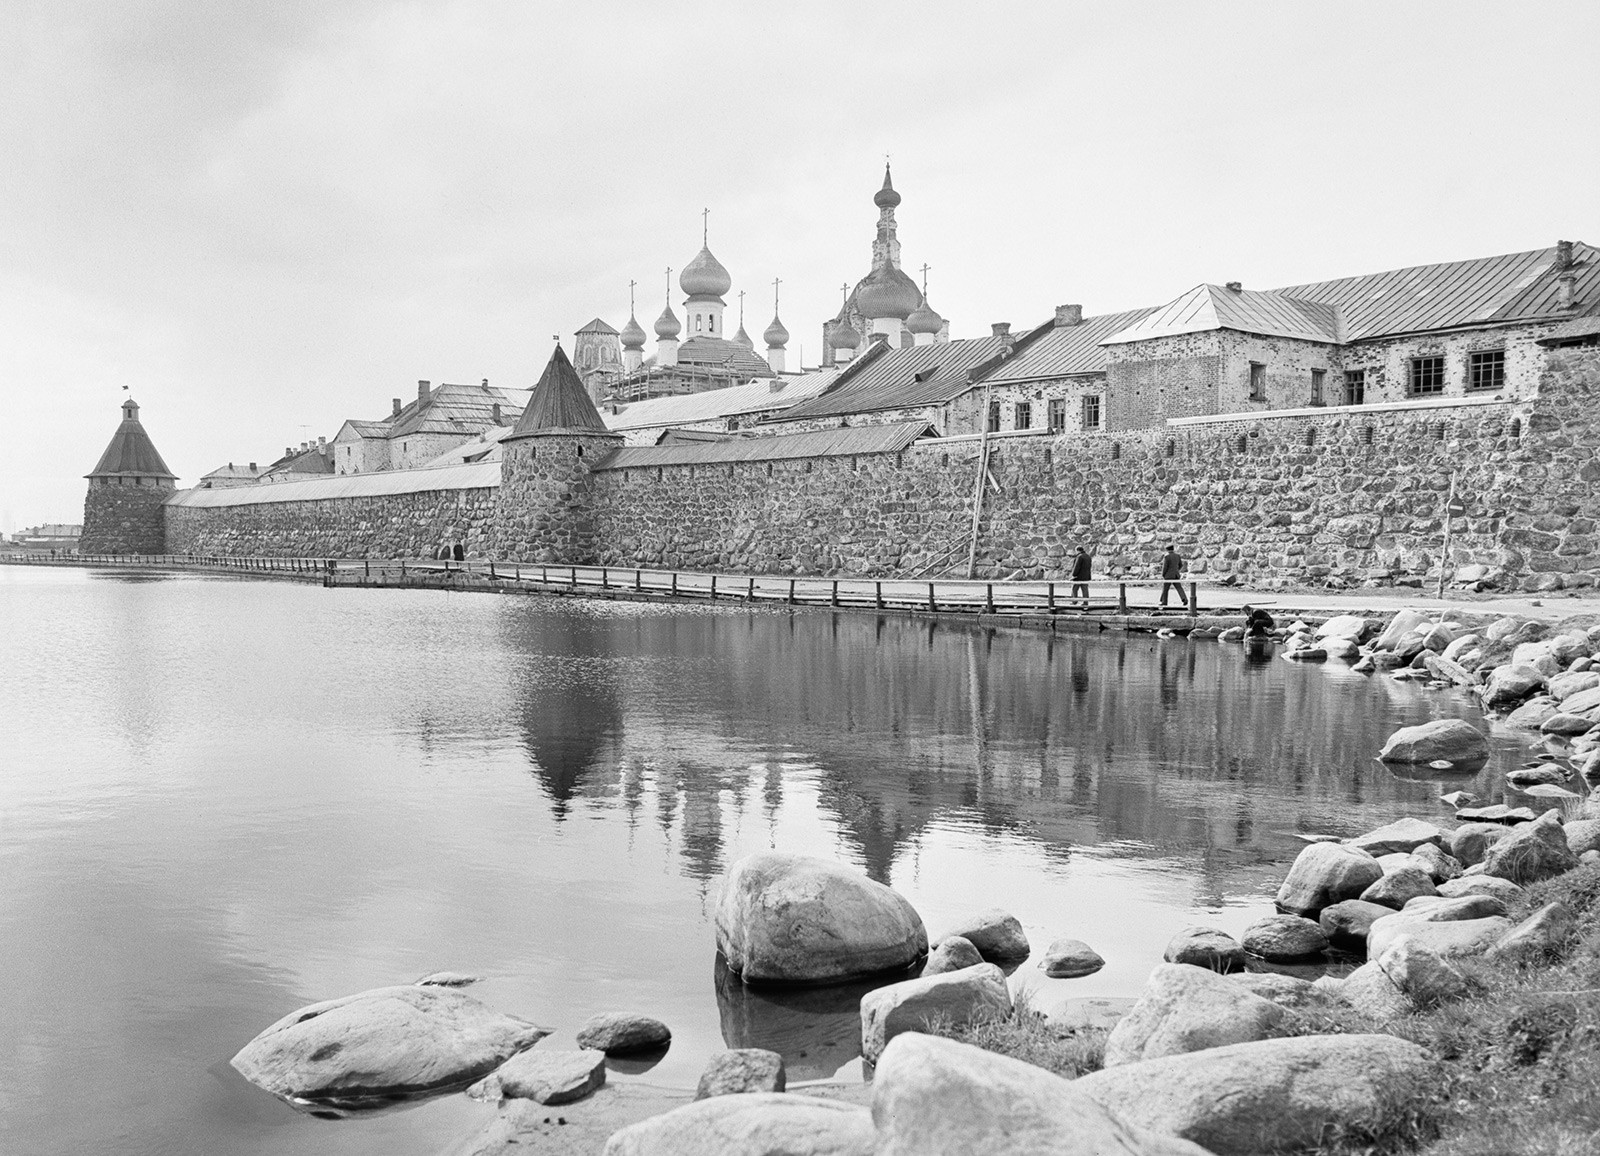 Solovetski manastir

